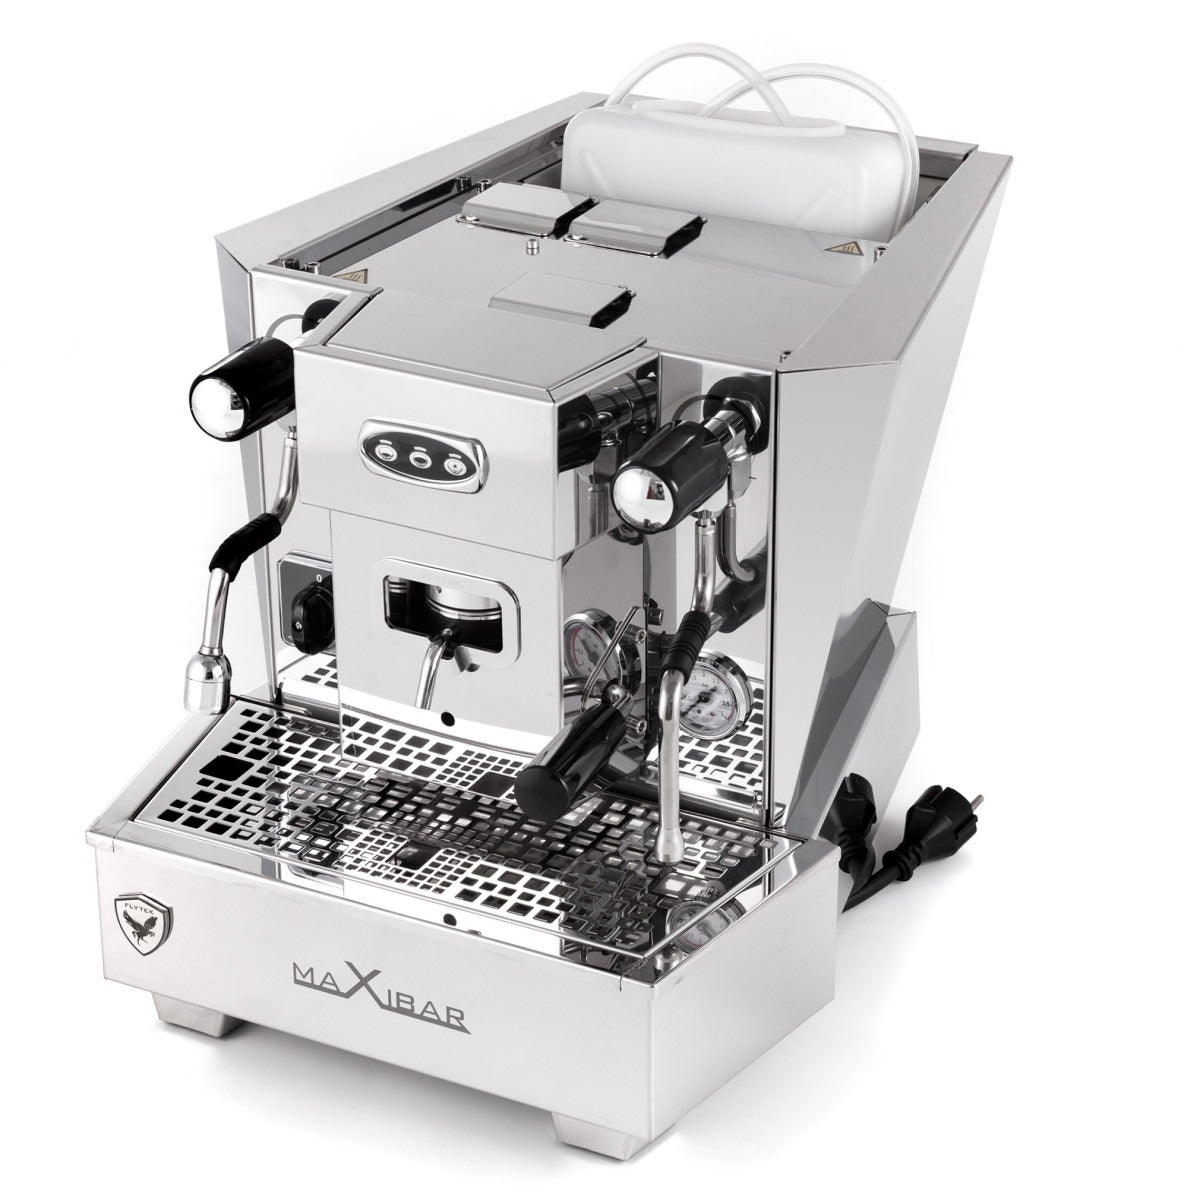 Maxibar coffee machine